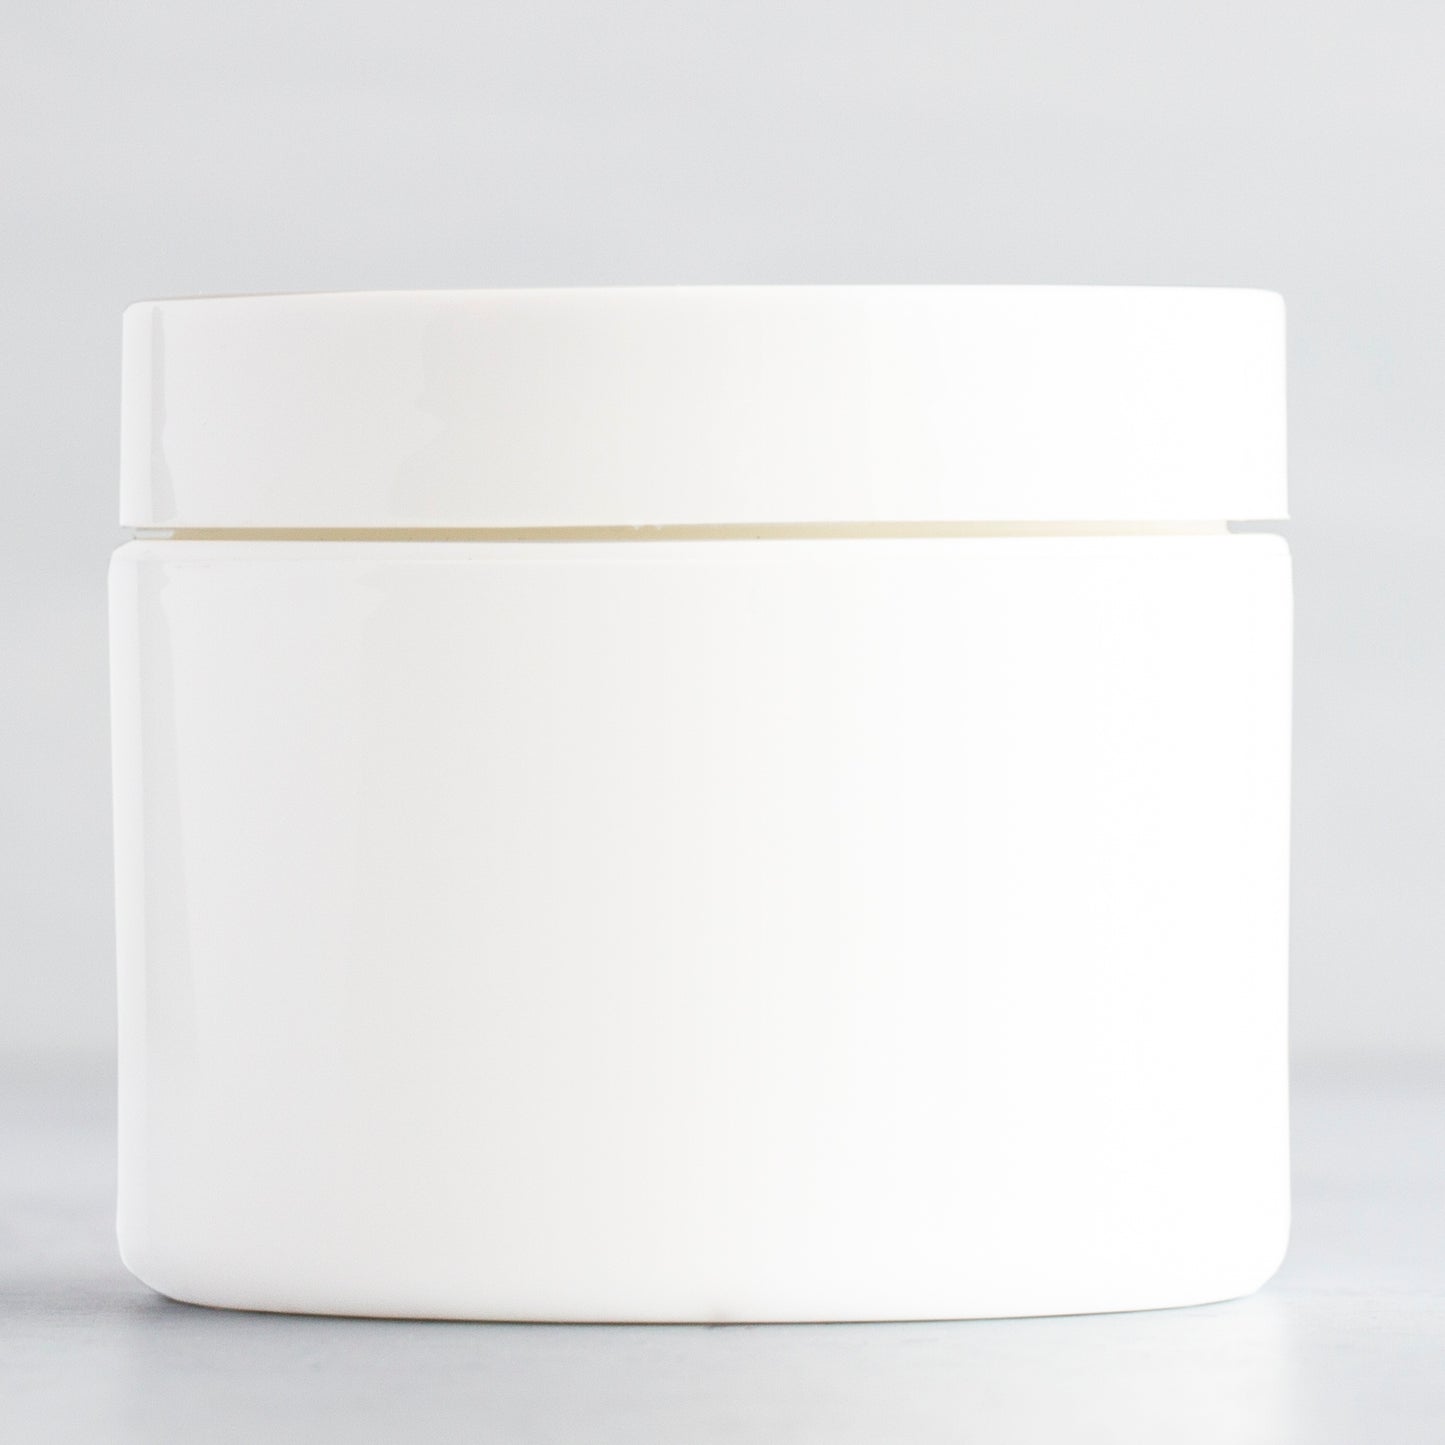 2 oz White Square Base Plastic Jar with White Gloss Flat Cap